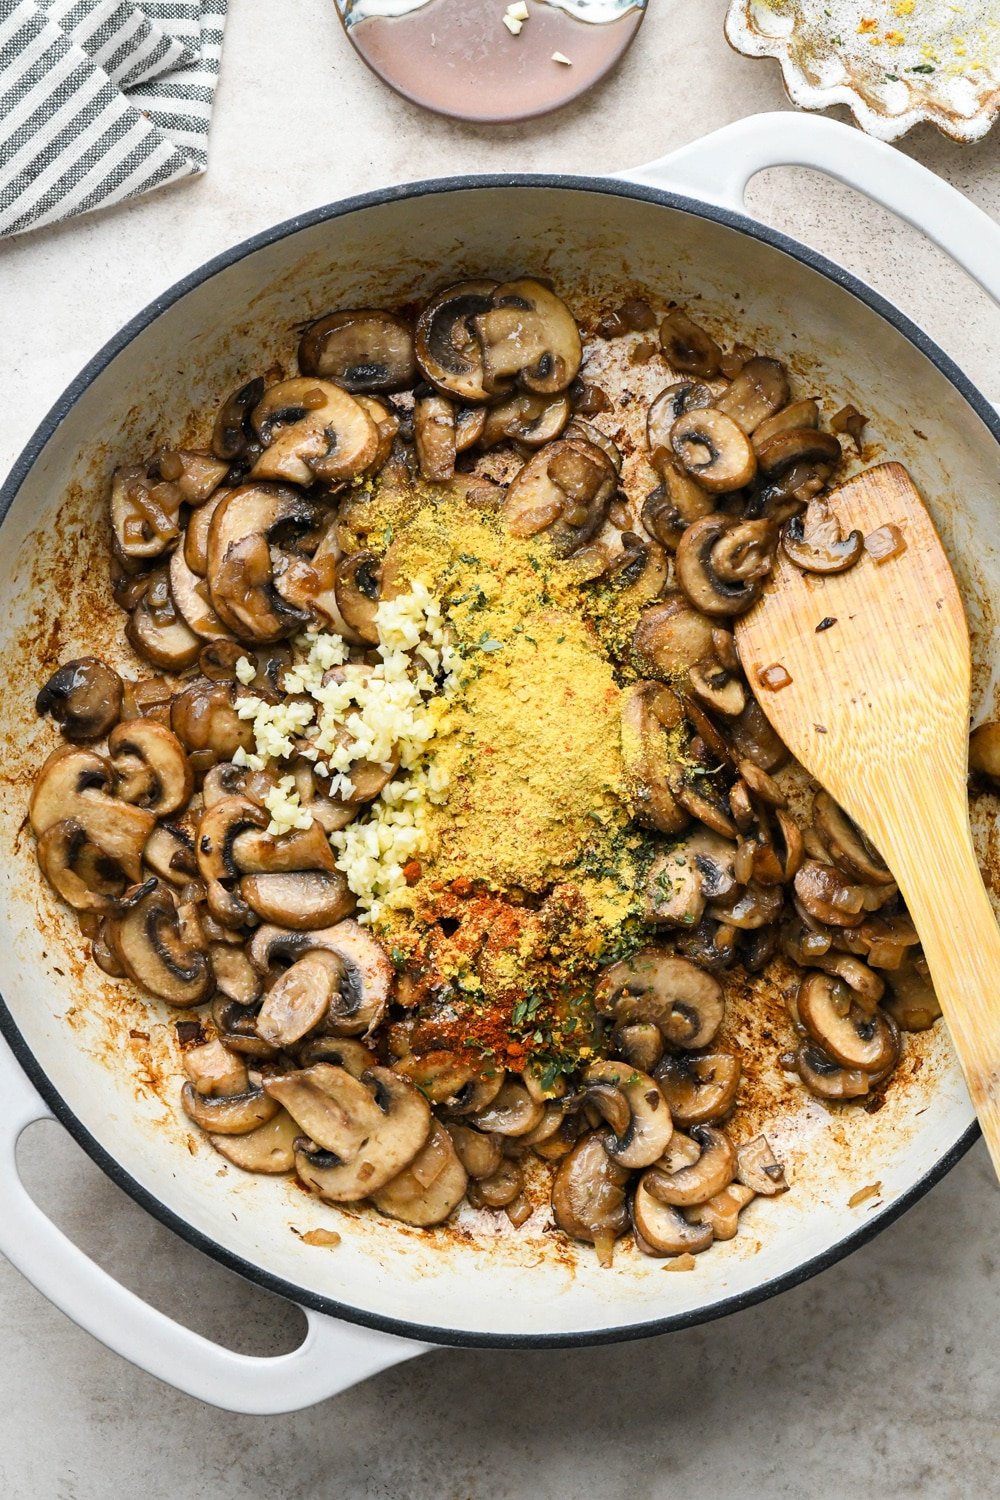 How to make Gluten Free Mushroom Gravy: Spices, aromatics, and garlic in skillet with sautéed mushrooms.